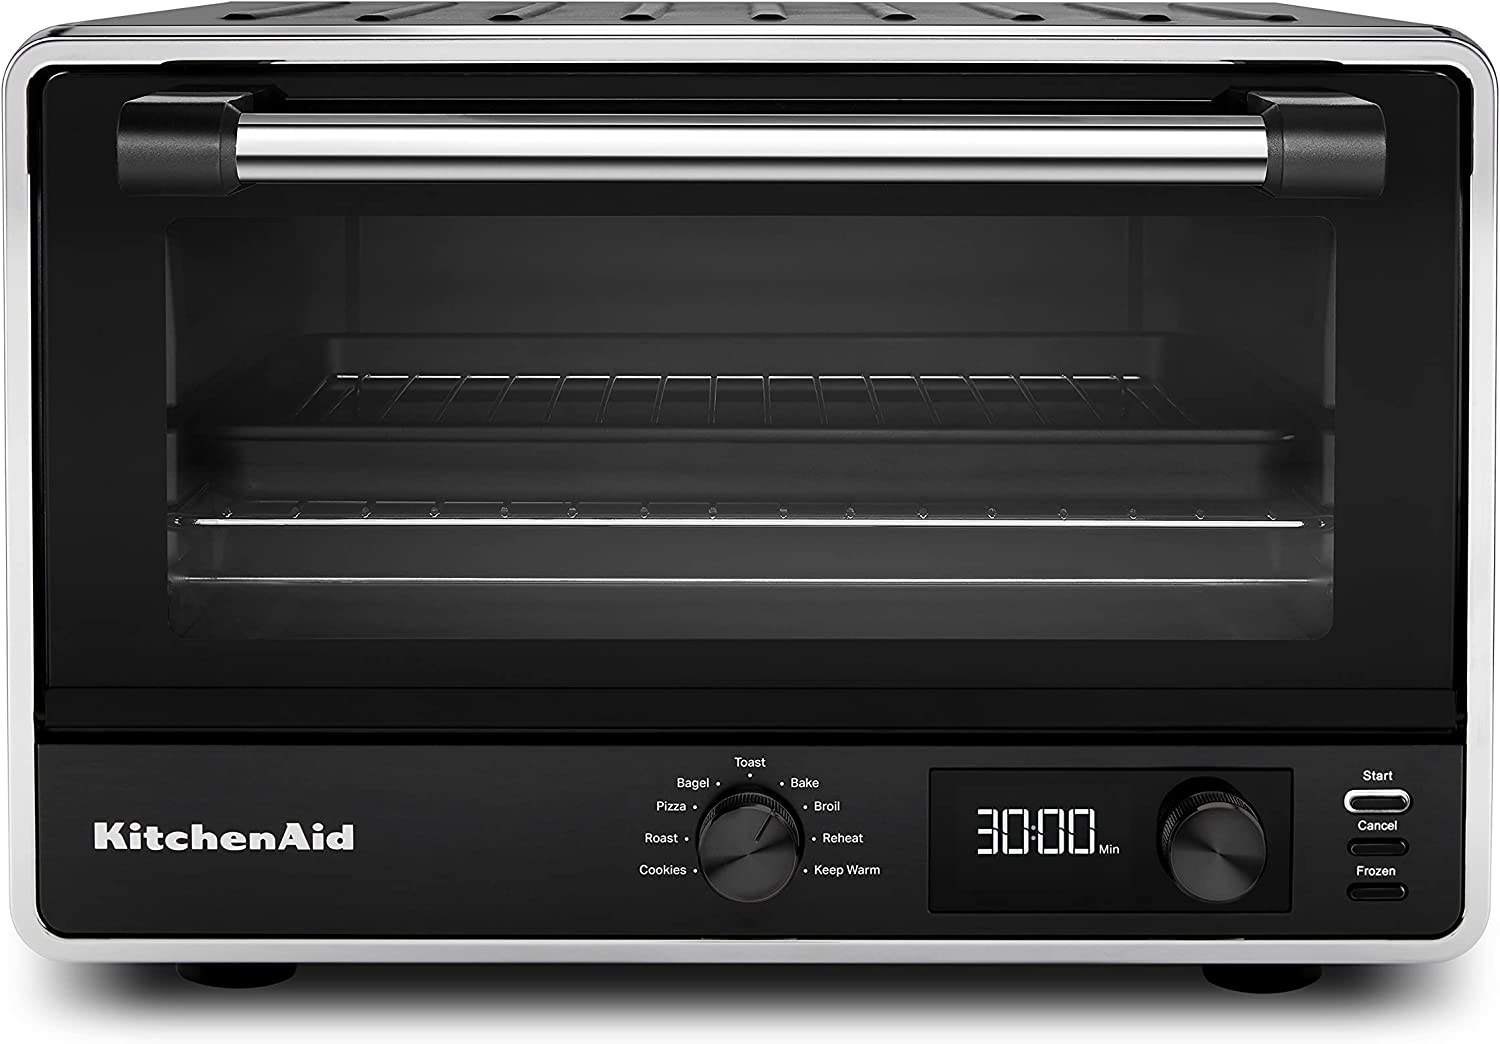 KitchenAid Large Capacity Countertop Toaster Oven